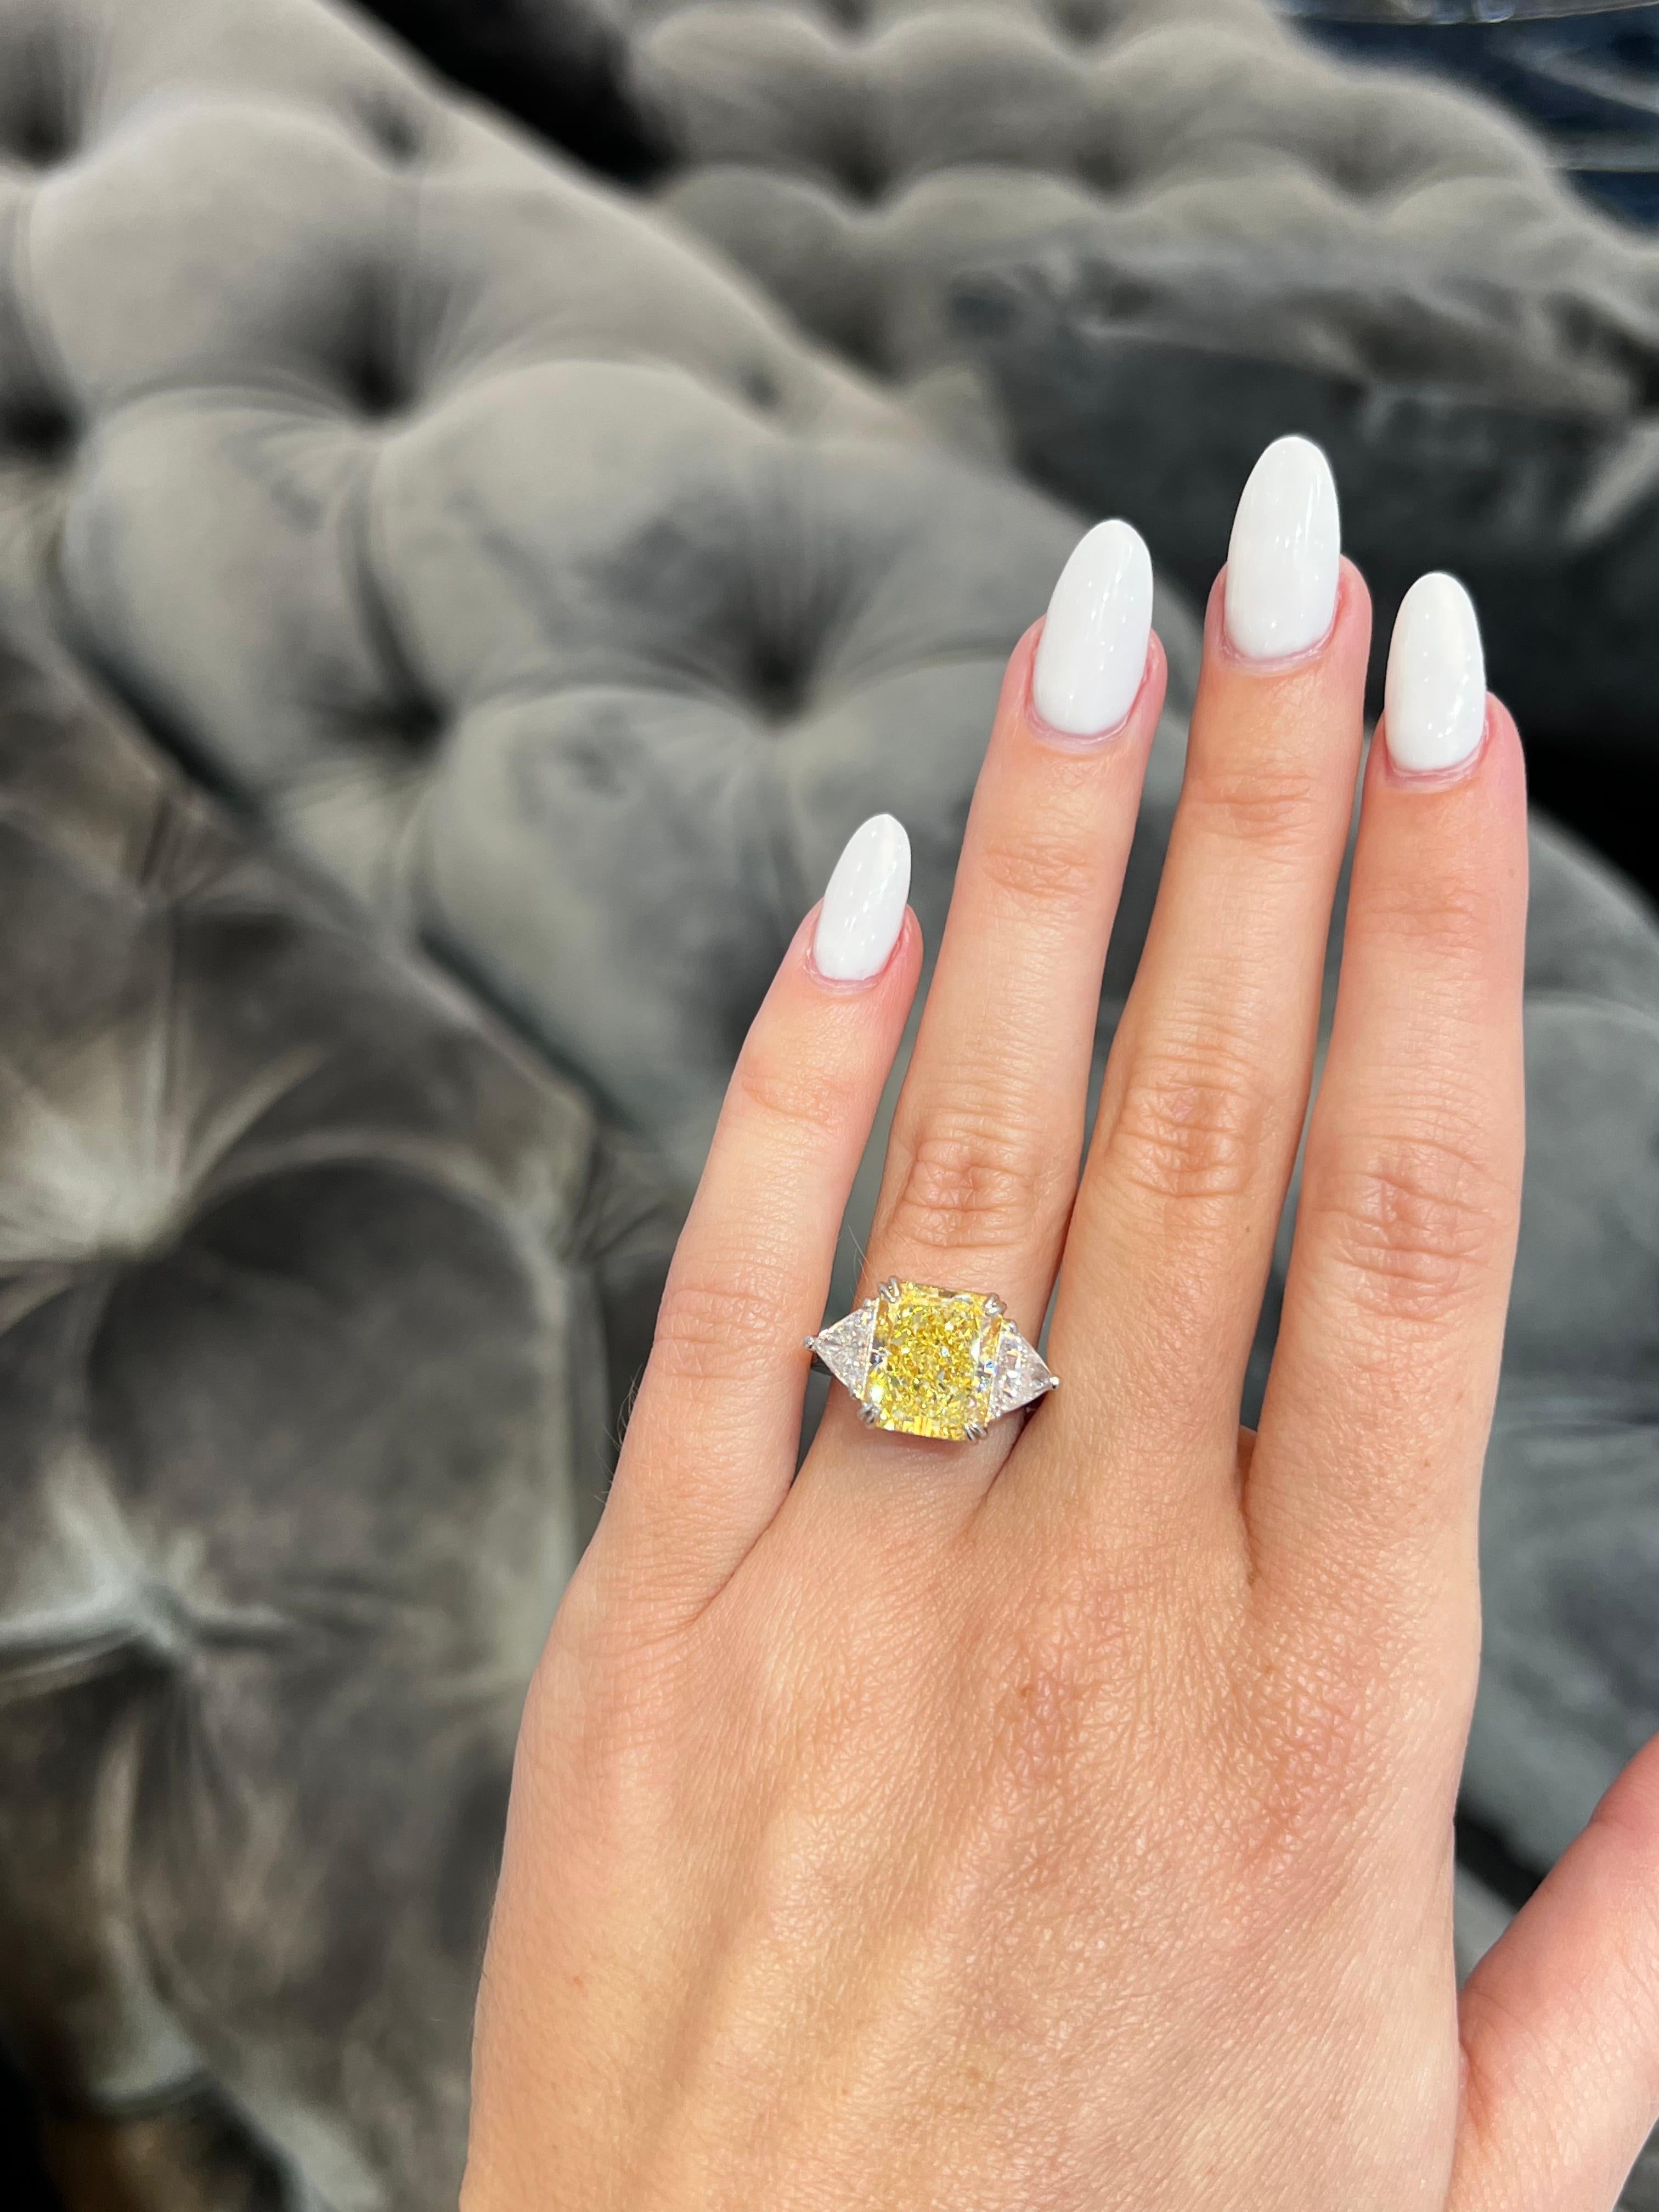 David Rosenberg 5.68 ct Fancy Light Yellow Radiant GIA Diamond Engagement Ring For Sale 4